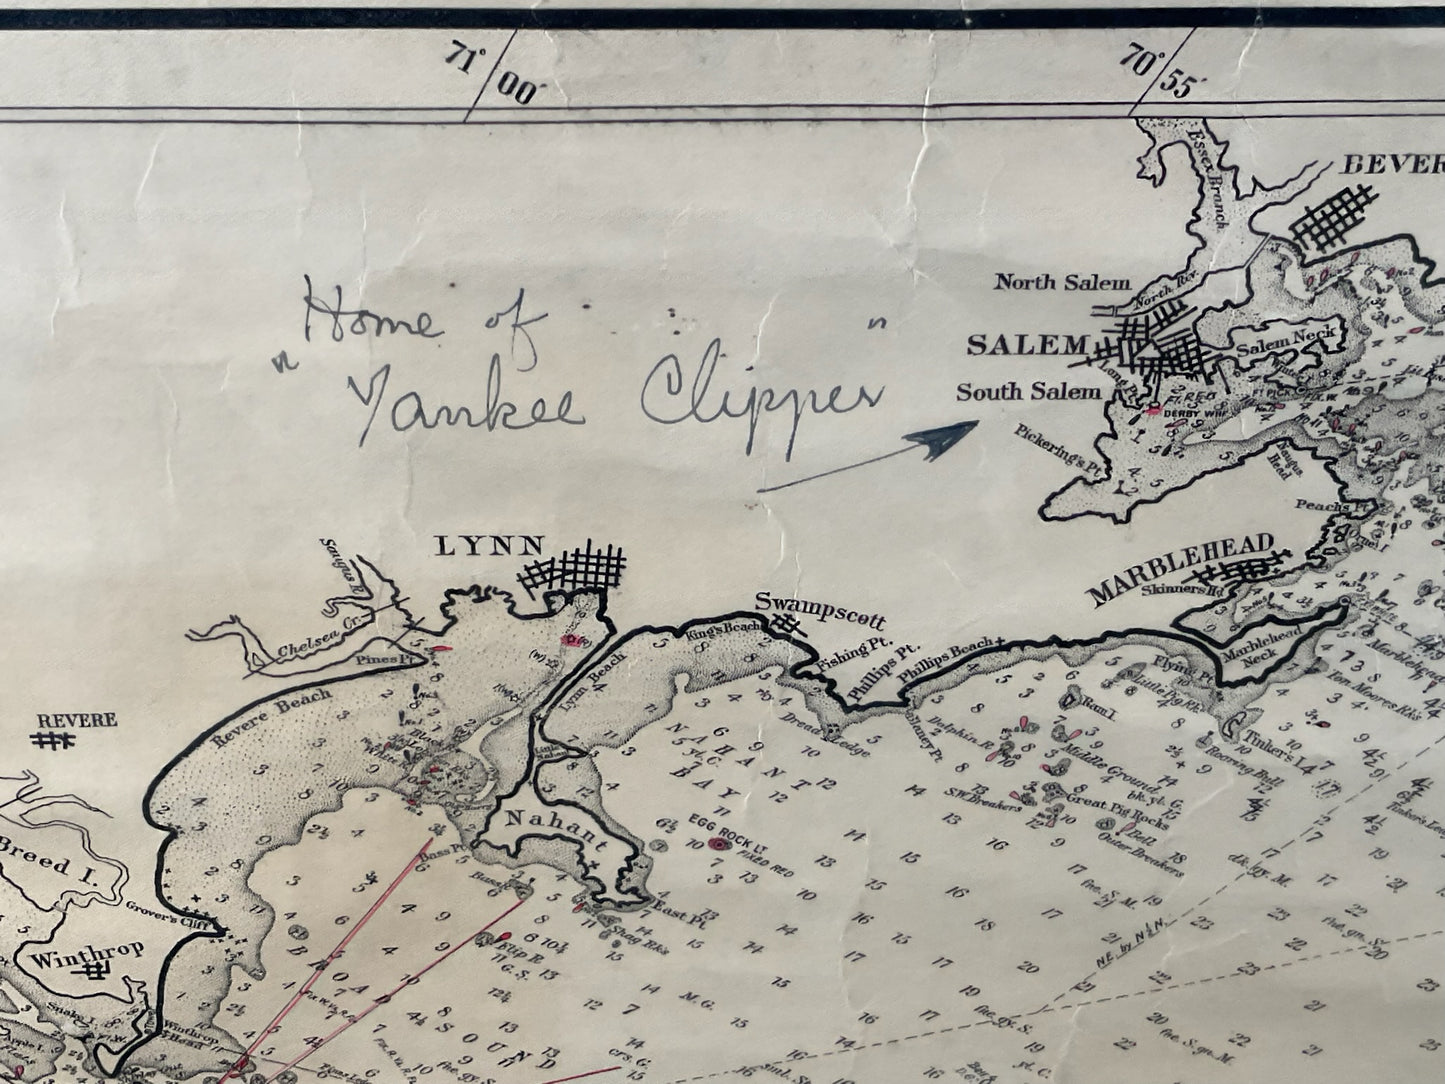 1918 George Eldridge Chart of Massachusetts Bay